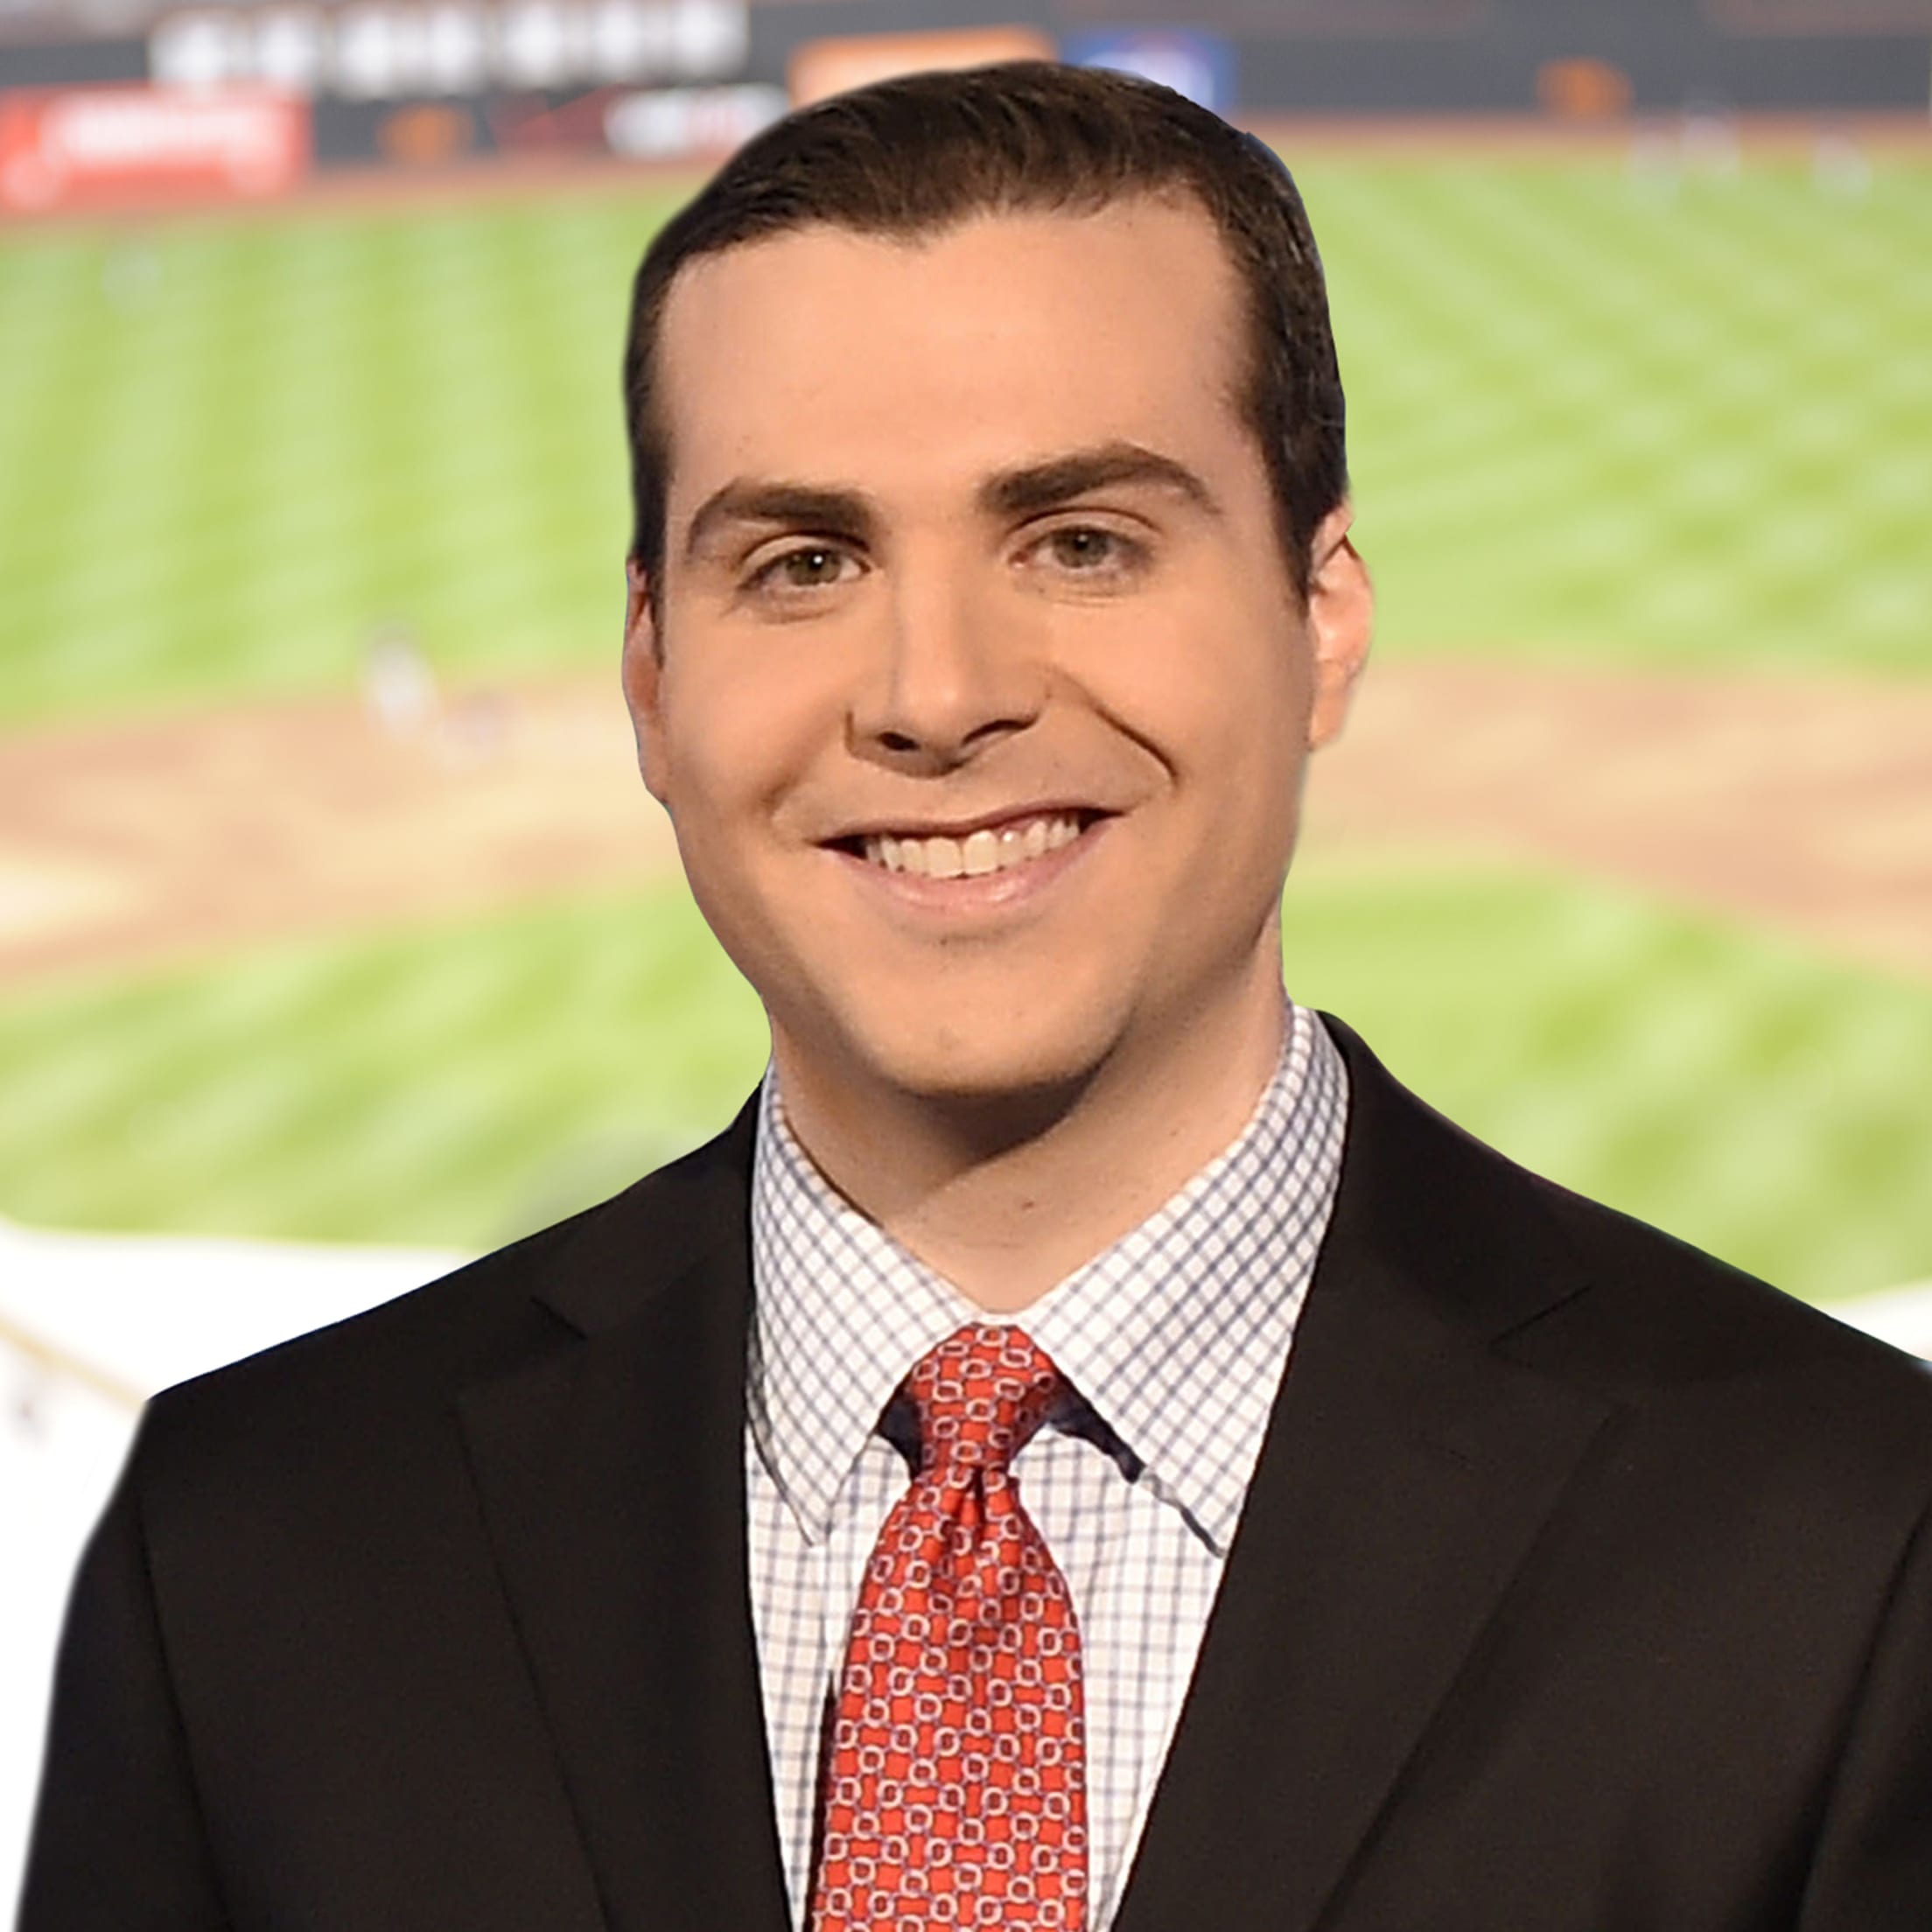 Mets Broadcasters | New York Mets